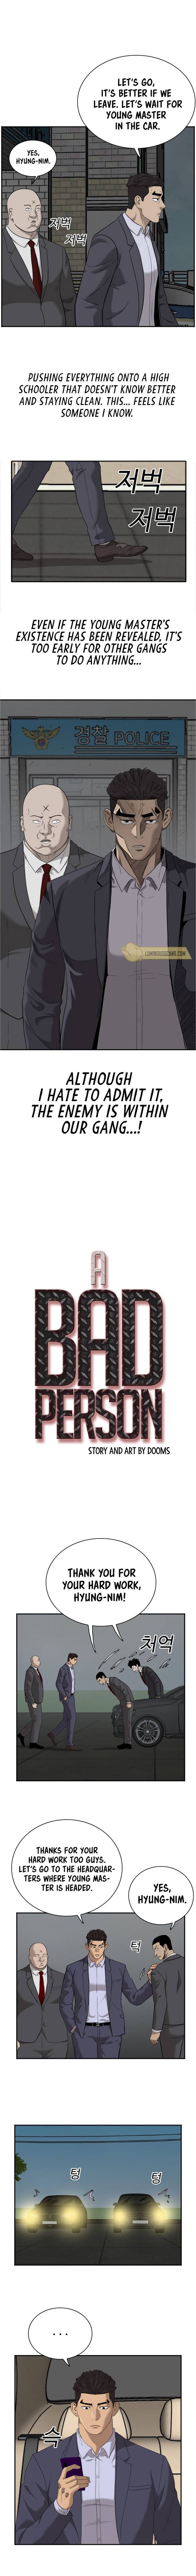 Bad Boy Dooms 40 1